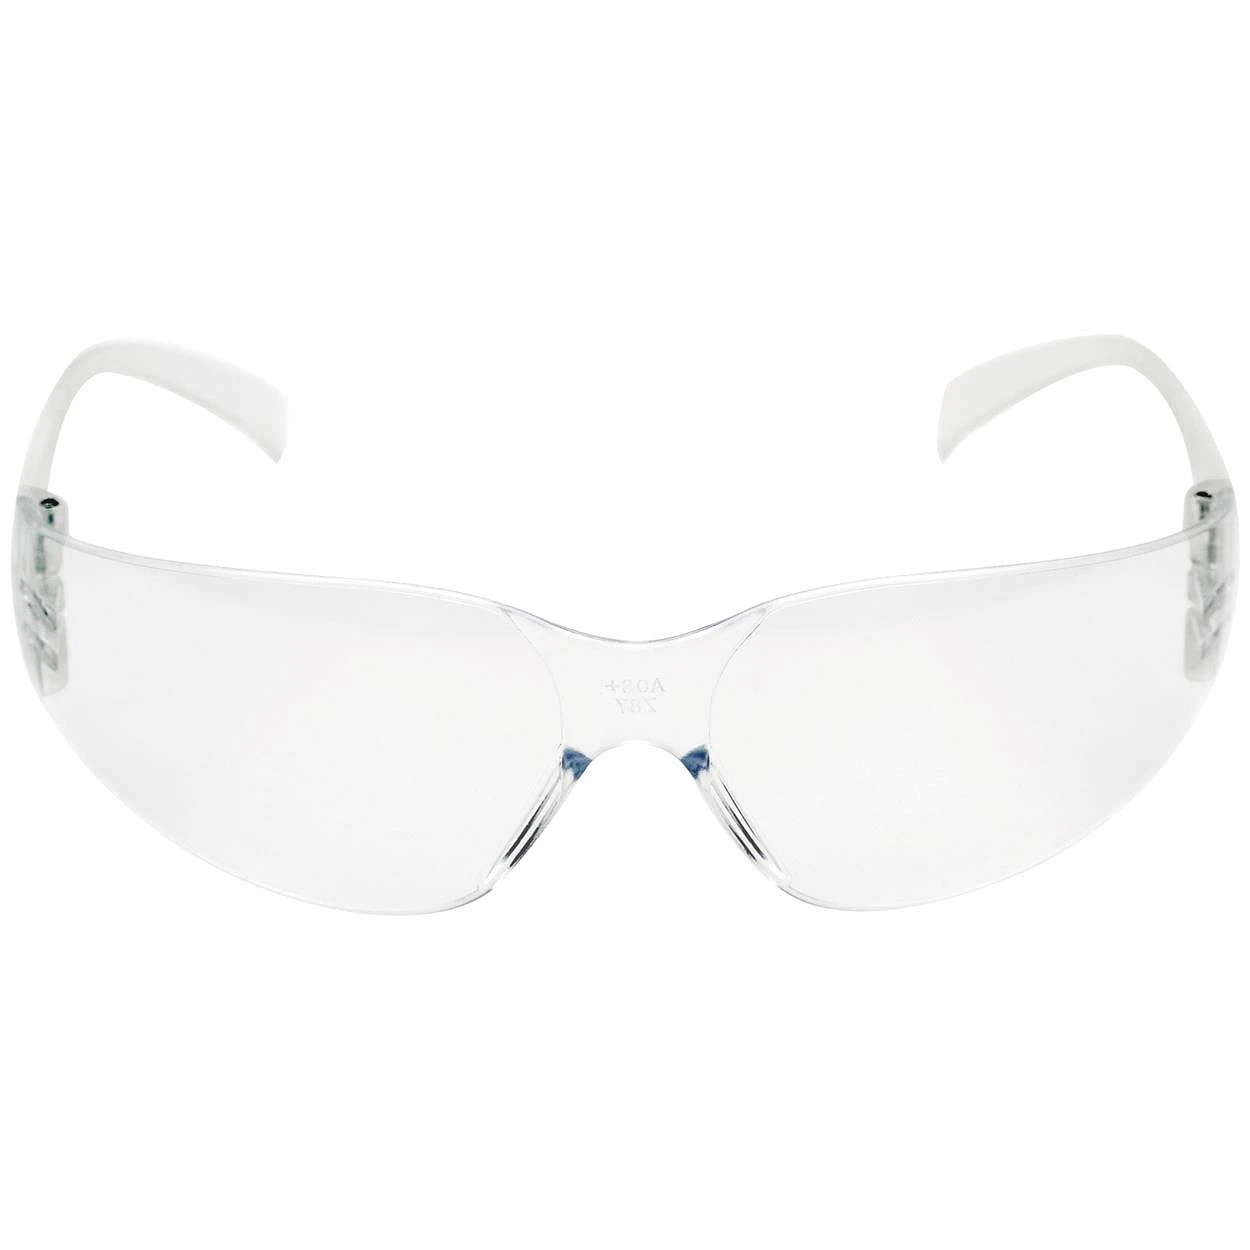 3M Veiligheidsbril Virtua Transparant